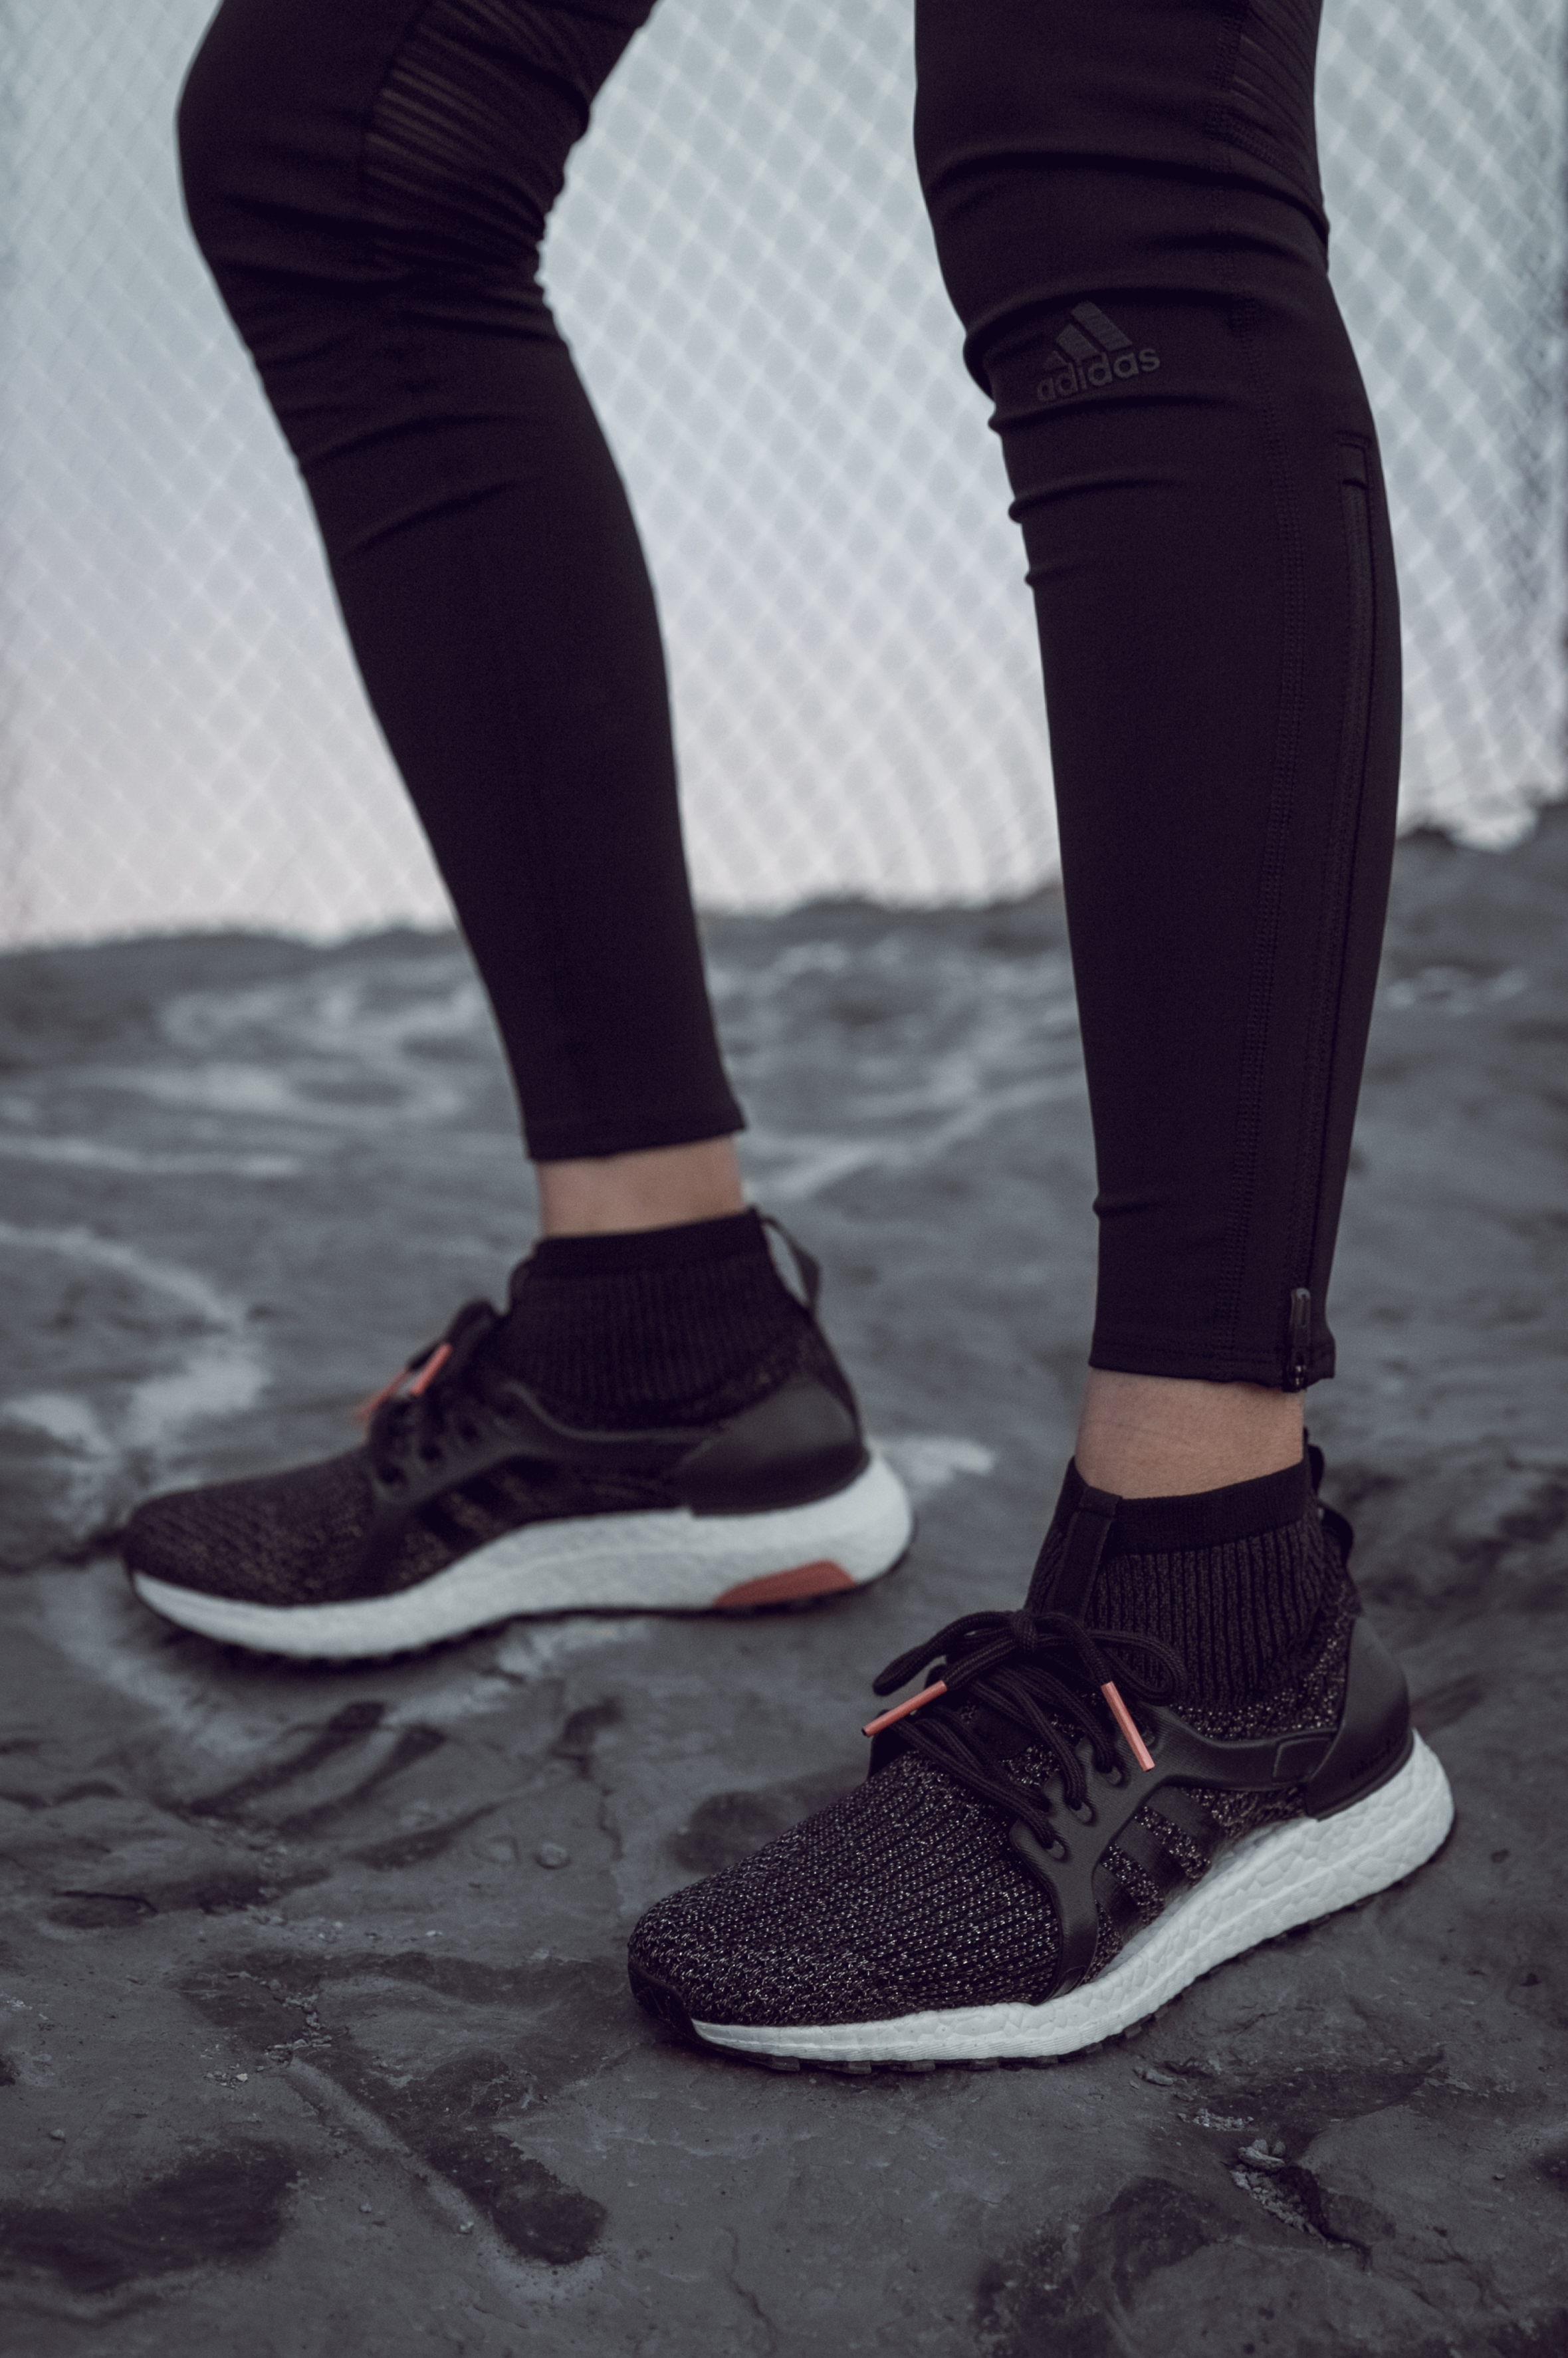 adidas women's ultraboost x all terrain trail running shoes